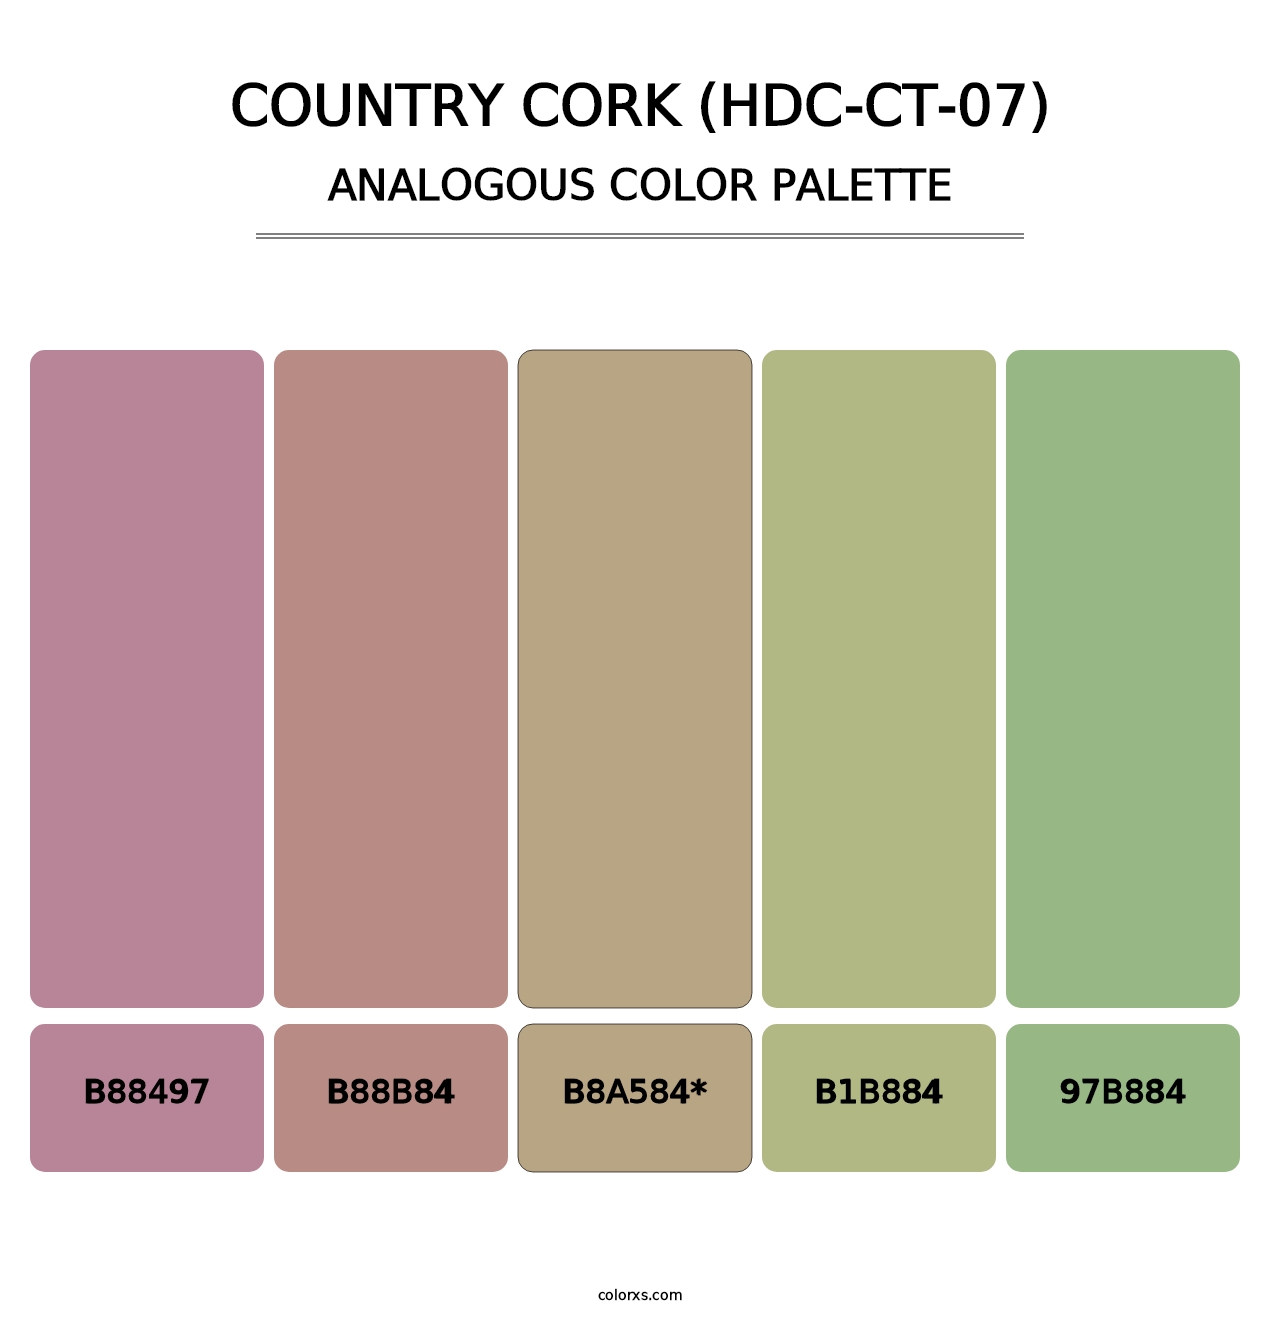 Country Cork (HDC-CT-07) - Analogous Color Palette